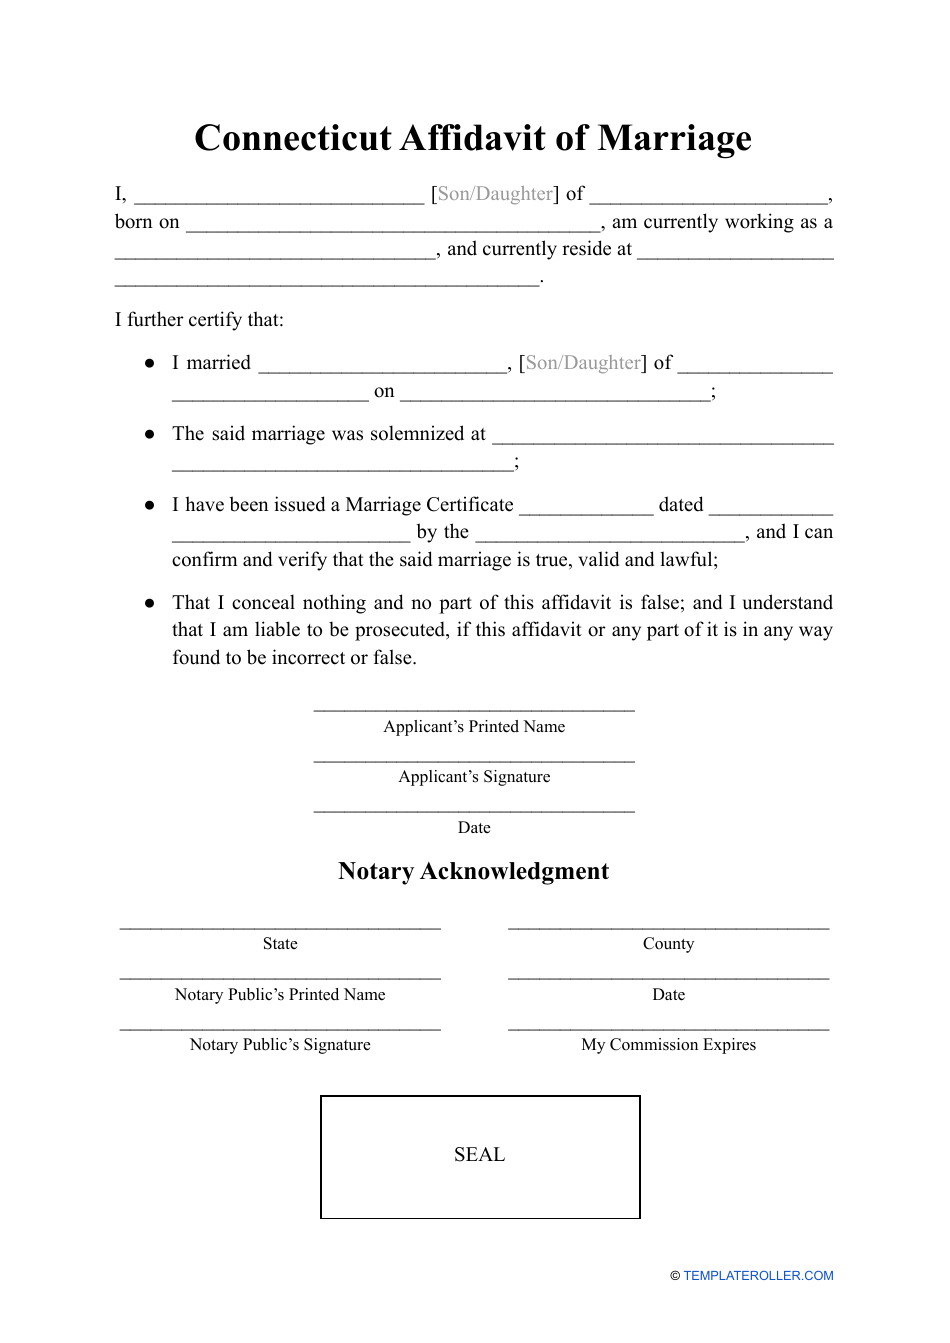 Affidavit of Marriage - Connecticut, Page 1